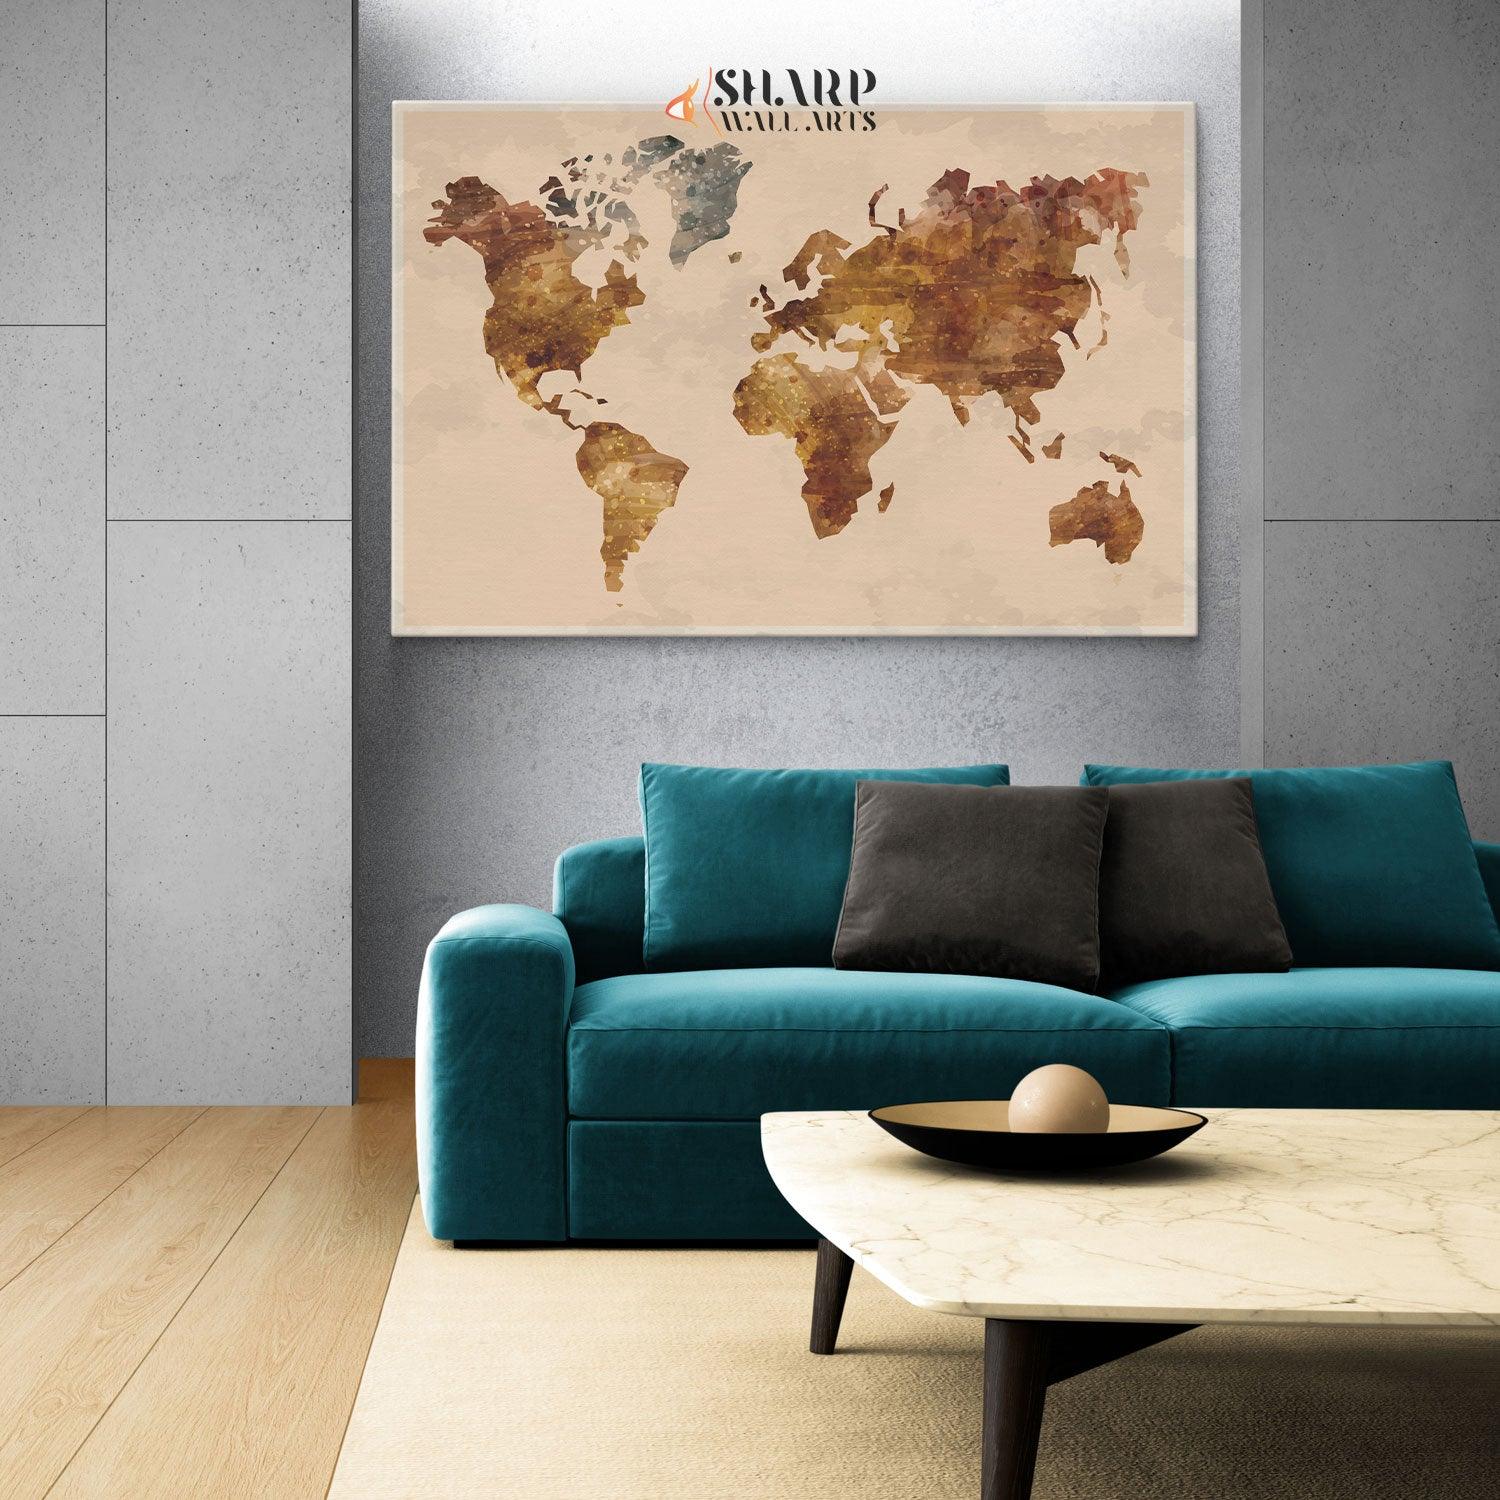 Abstract Large World Map - Travel World Map - SharpWallArts